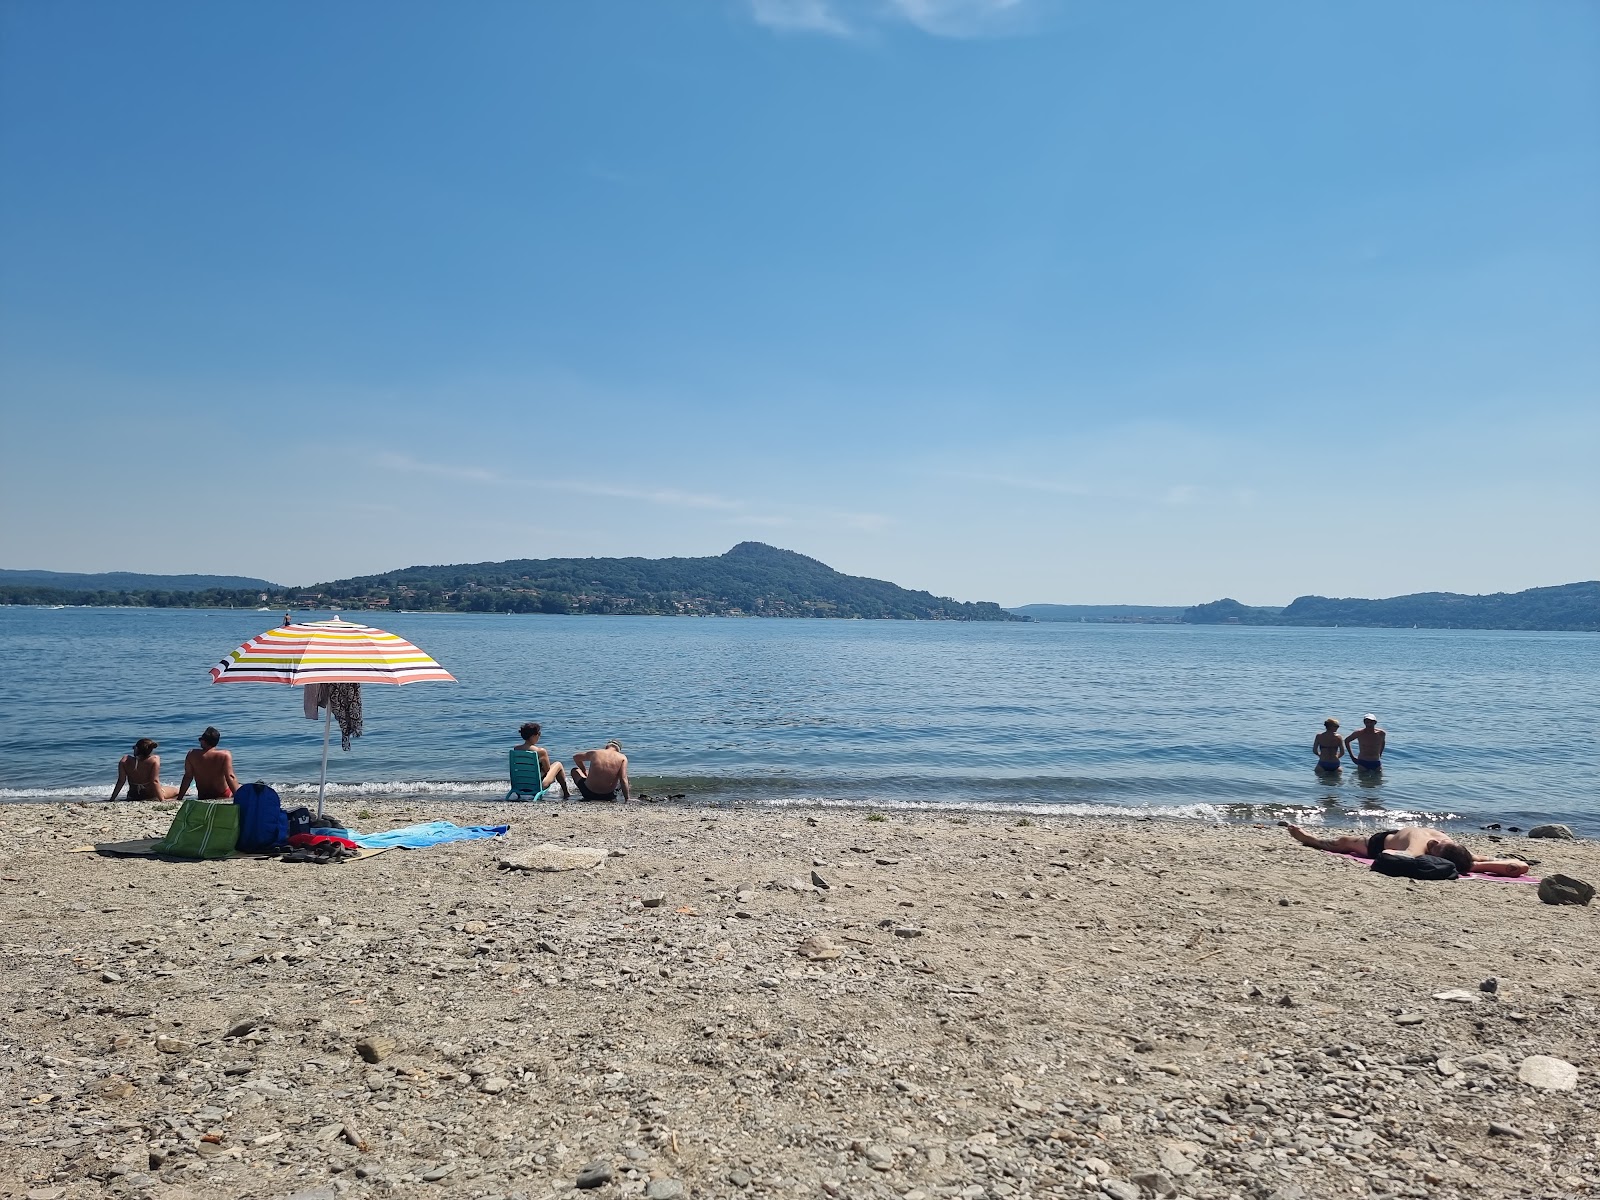 Spiaggia Lago Maggiore'in fotoğrafı doğrudan plaj ile birlikte